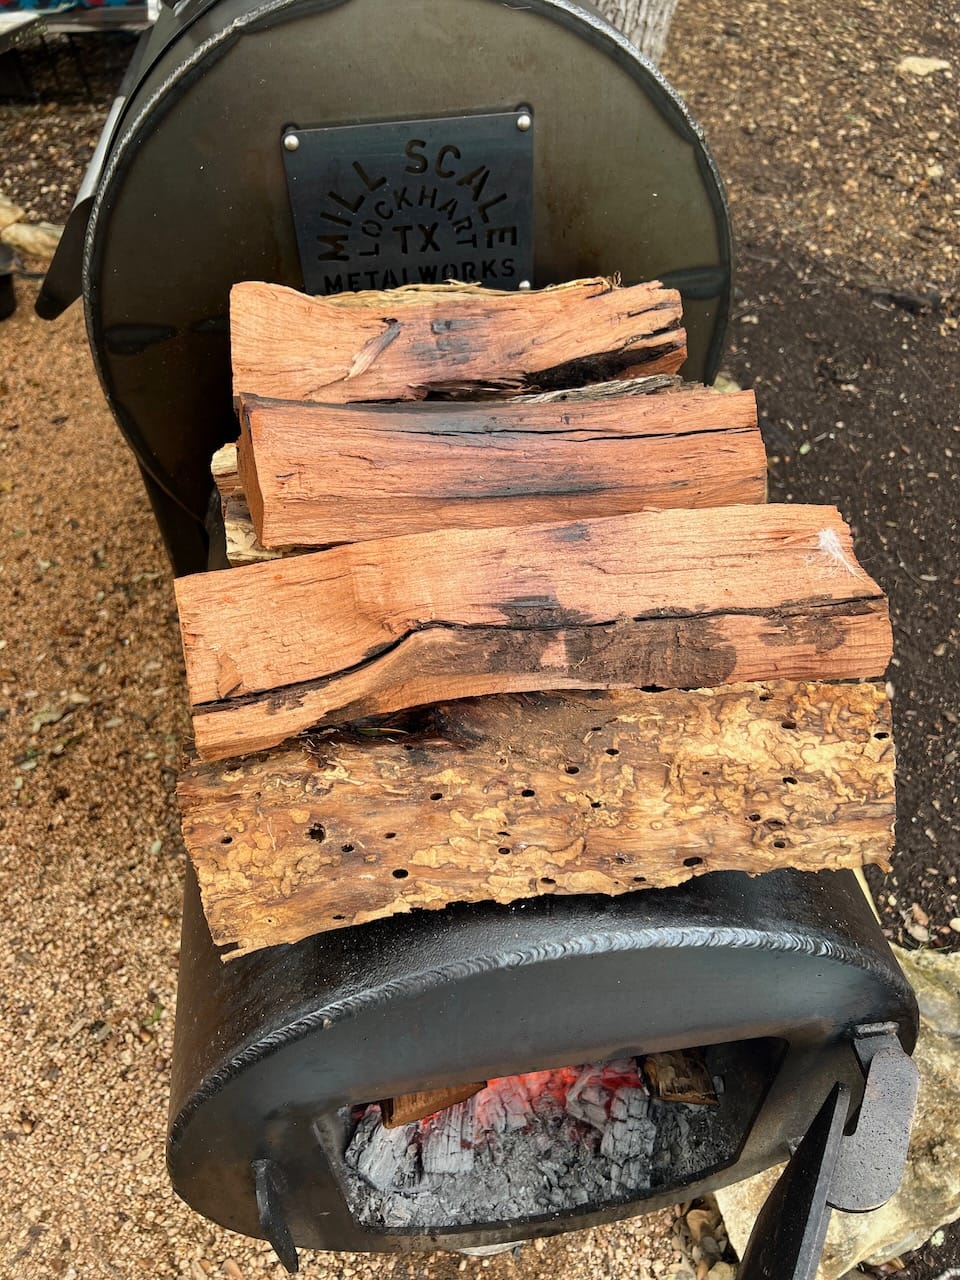 Preheating wood splits on top of Mill Scale 94 firebox.